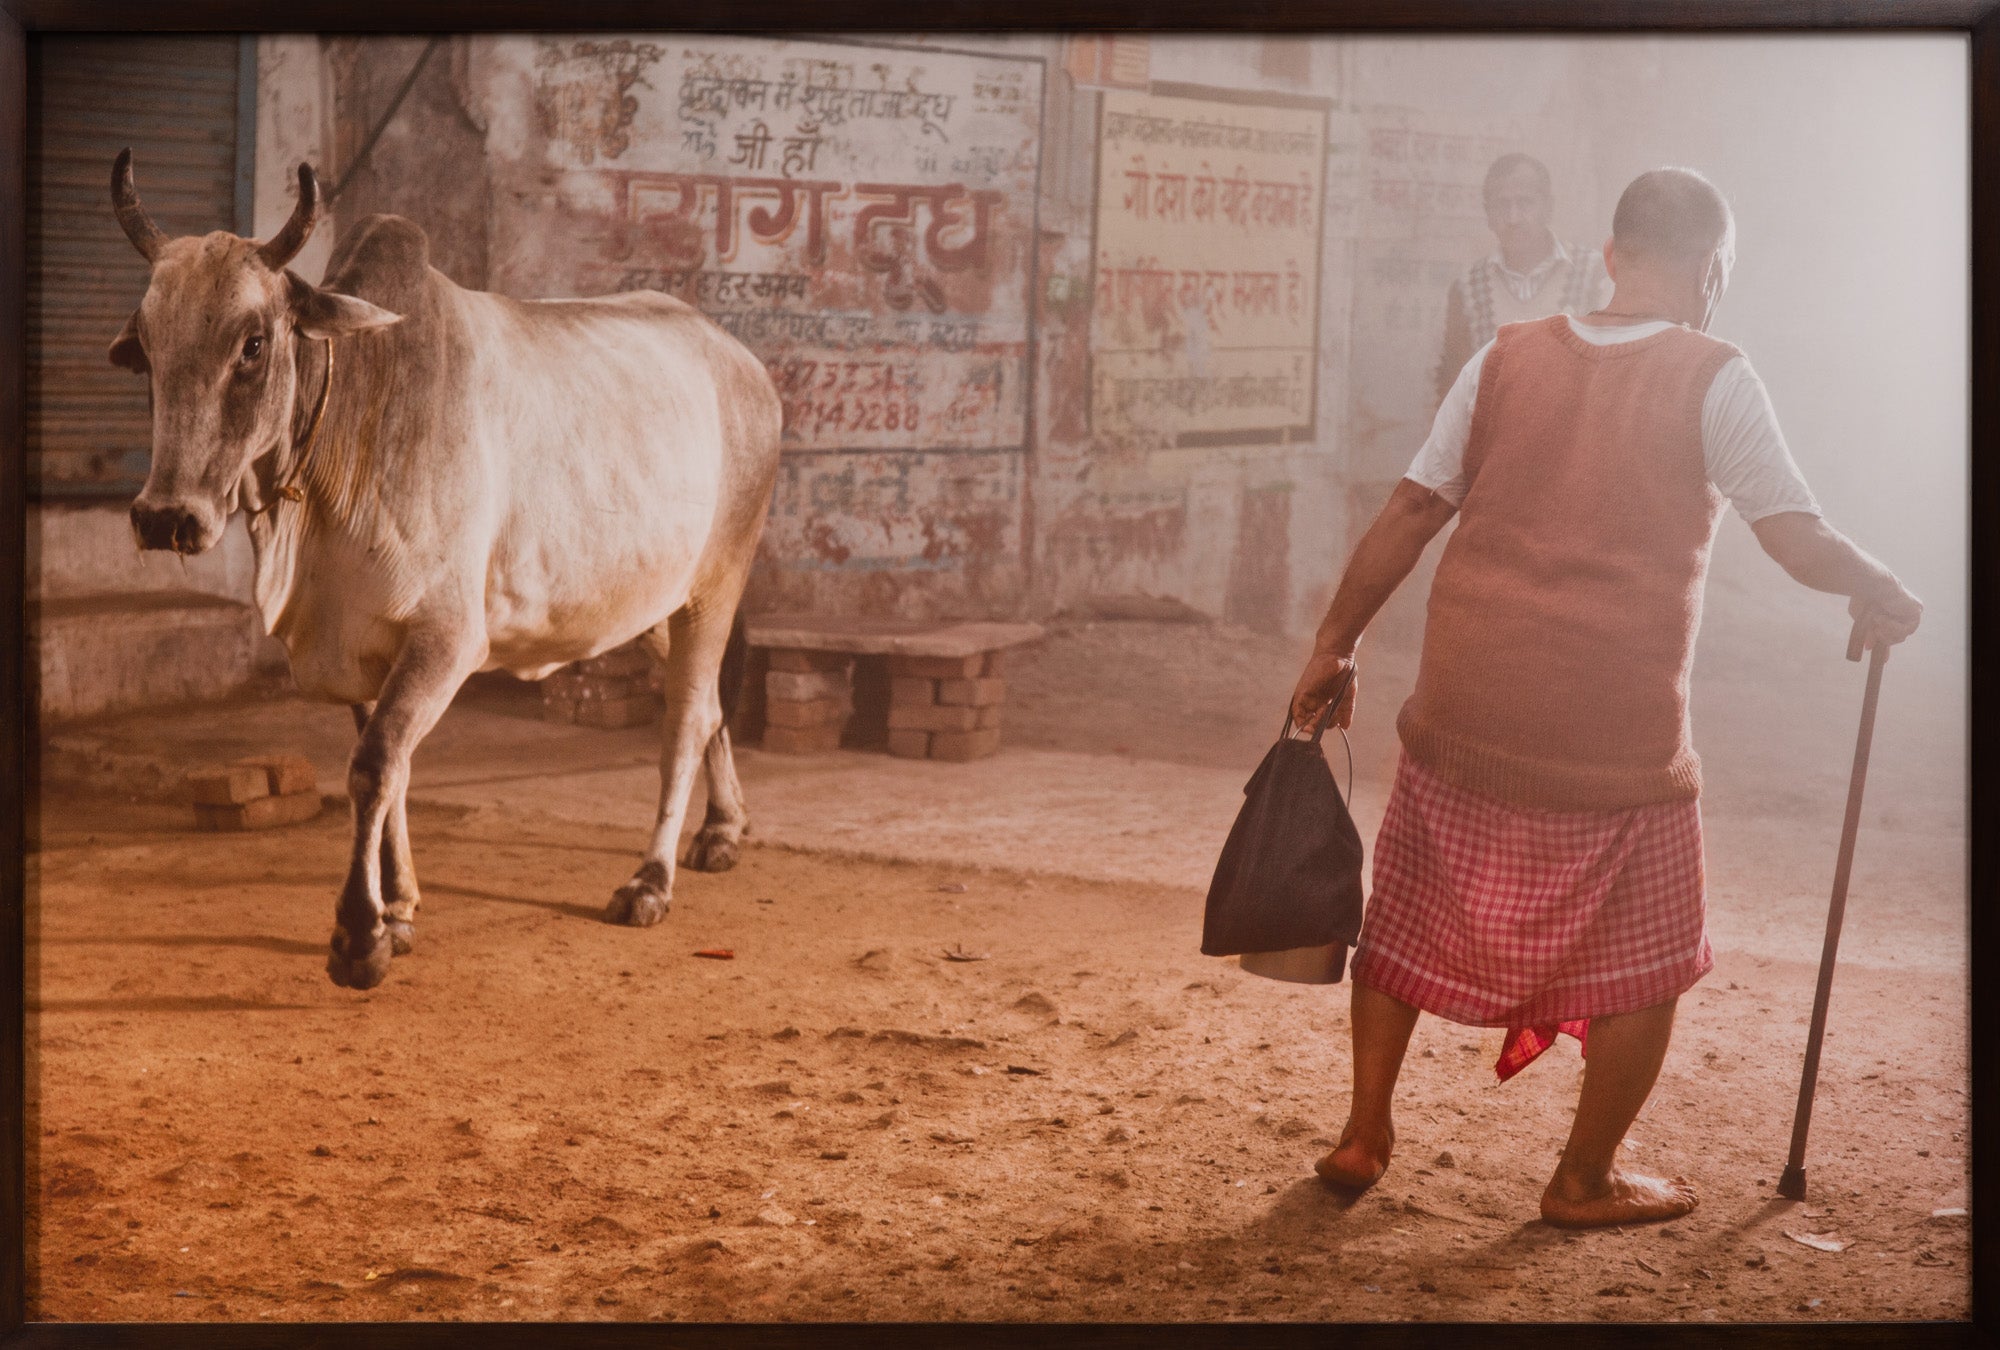 COW AND MEN, INDIEN